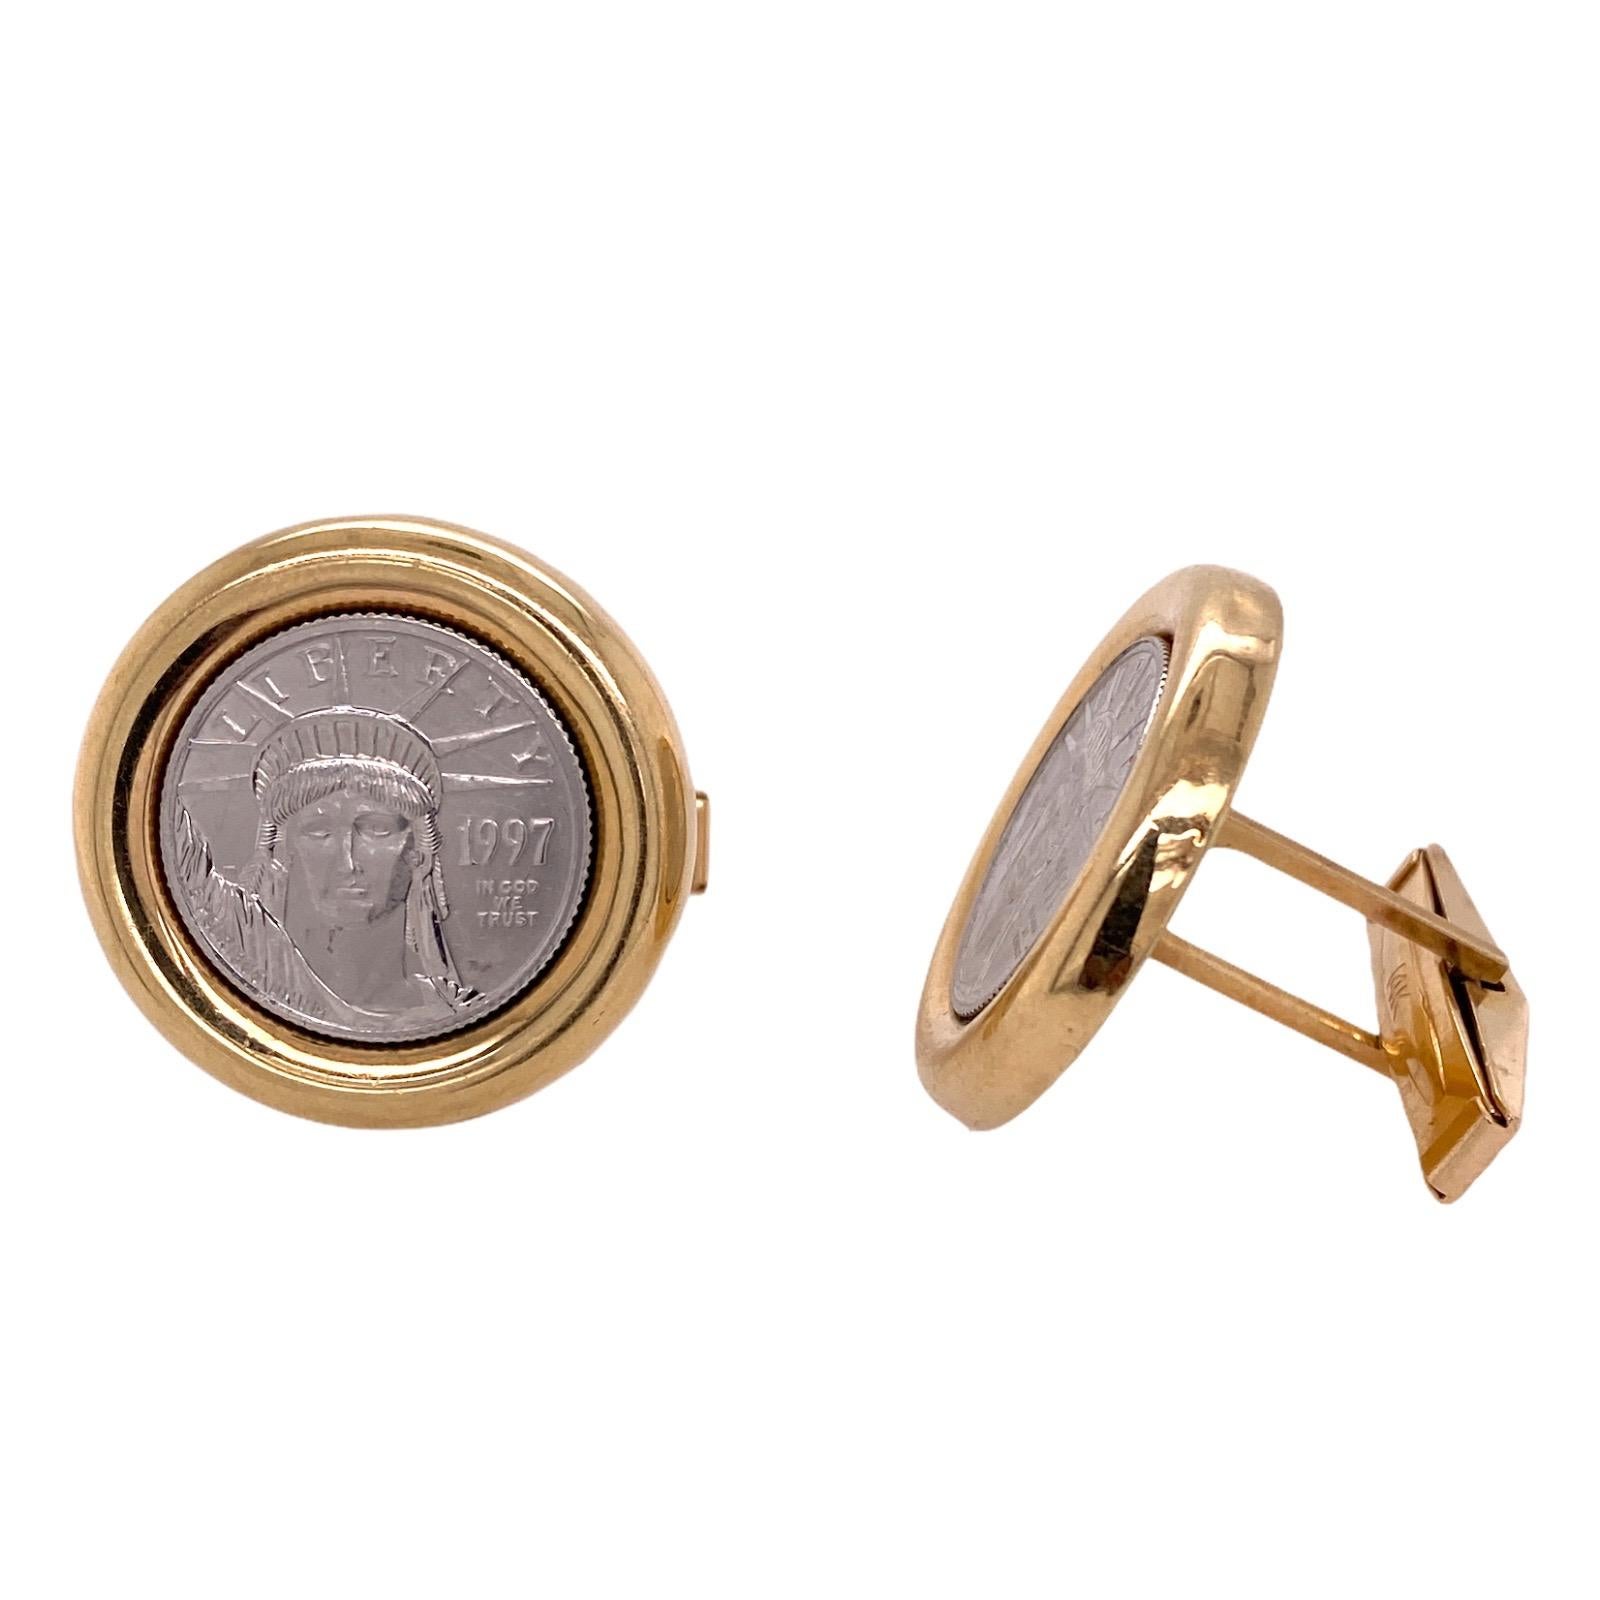 Platinum Liberty 1997 coin cufflinks set in 14 karat yellow gold. The vintage cufflinks measure 24mm in diameter. 